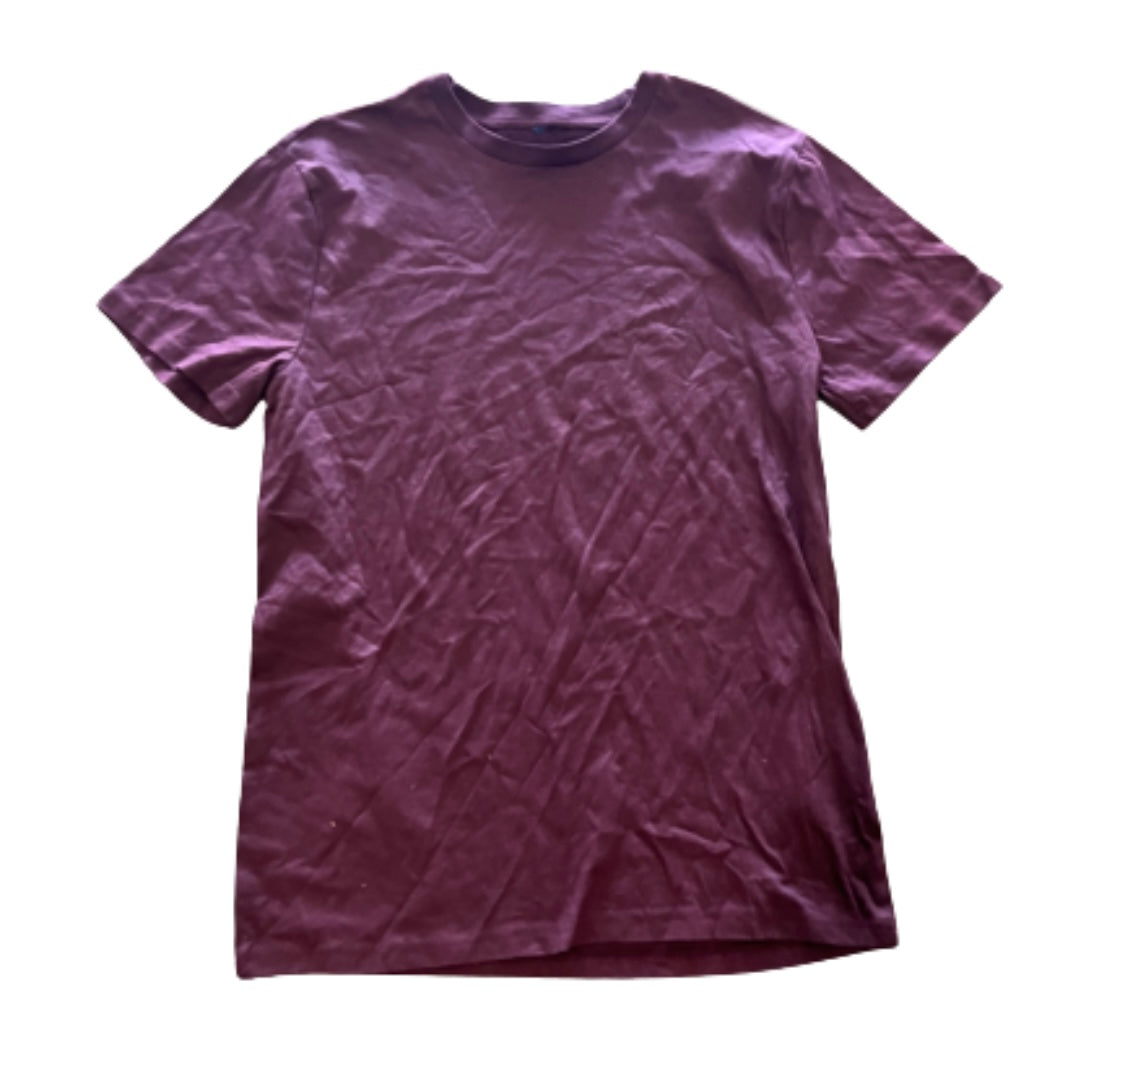 NEW GIRL: Nick Miller's Maroon T-shirt (L)